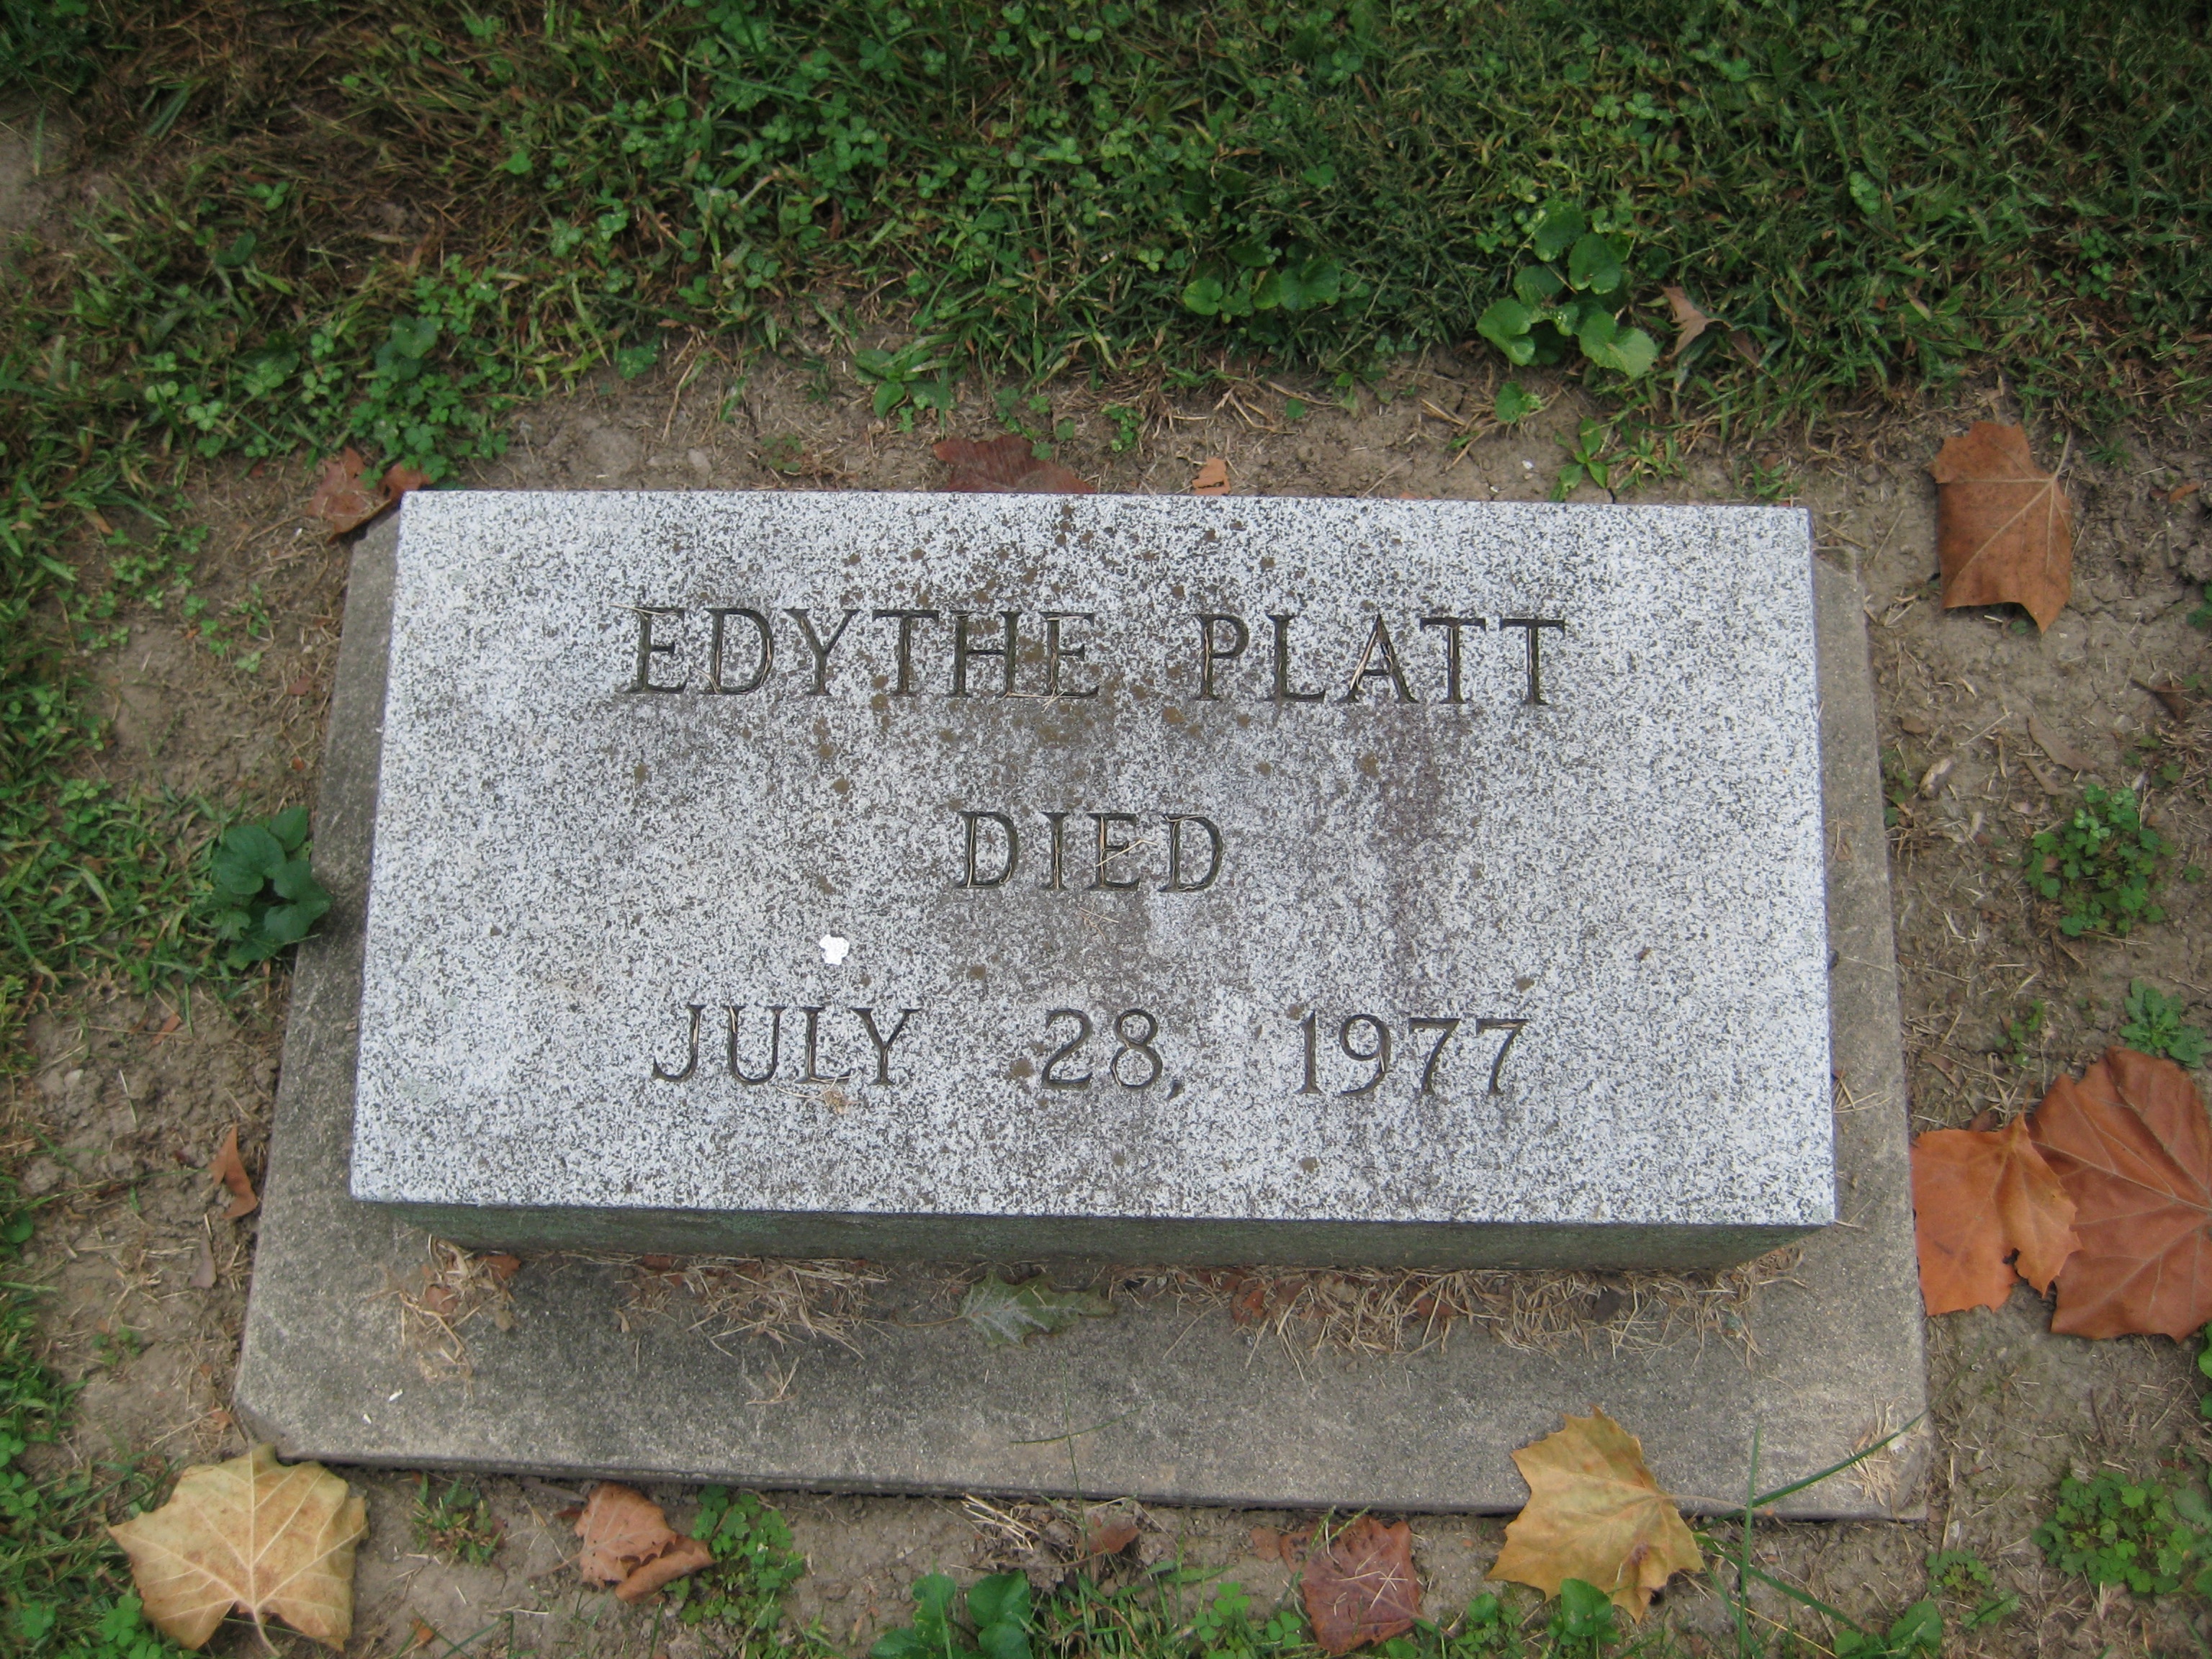 Platt, Edythe